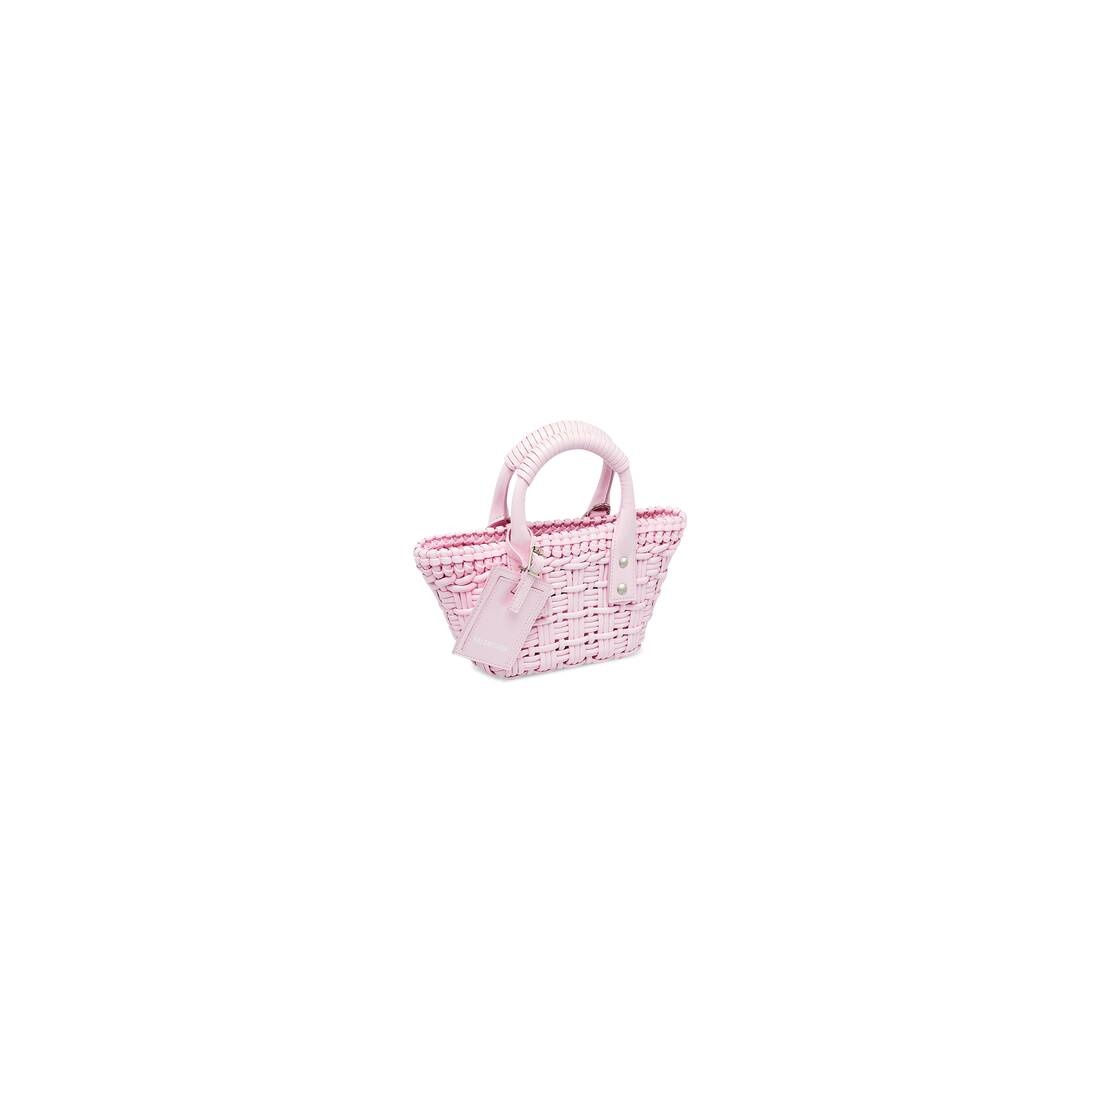 Women's Bistro Xxs Basket With Strap in Light Pink - 3